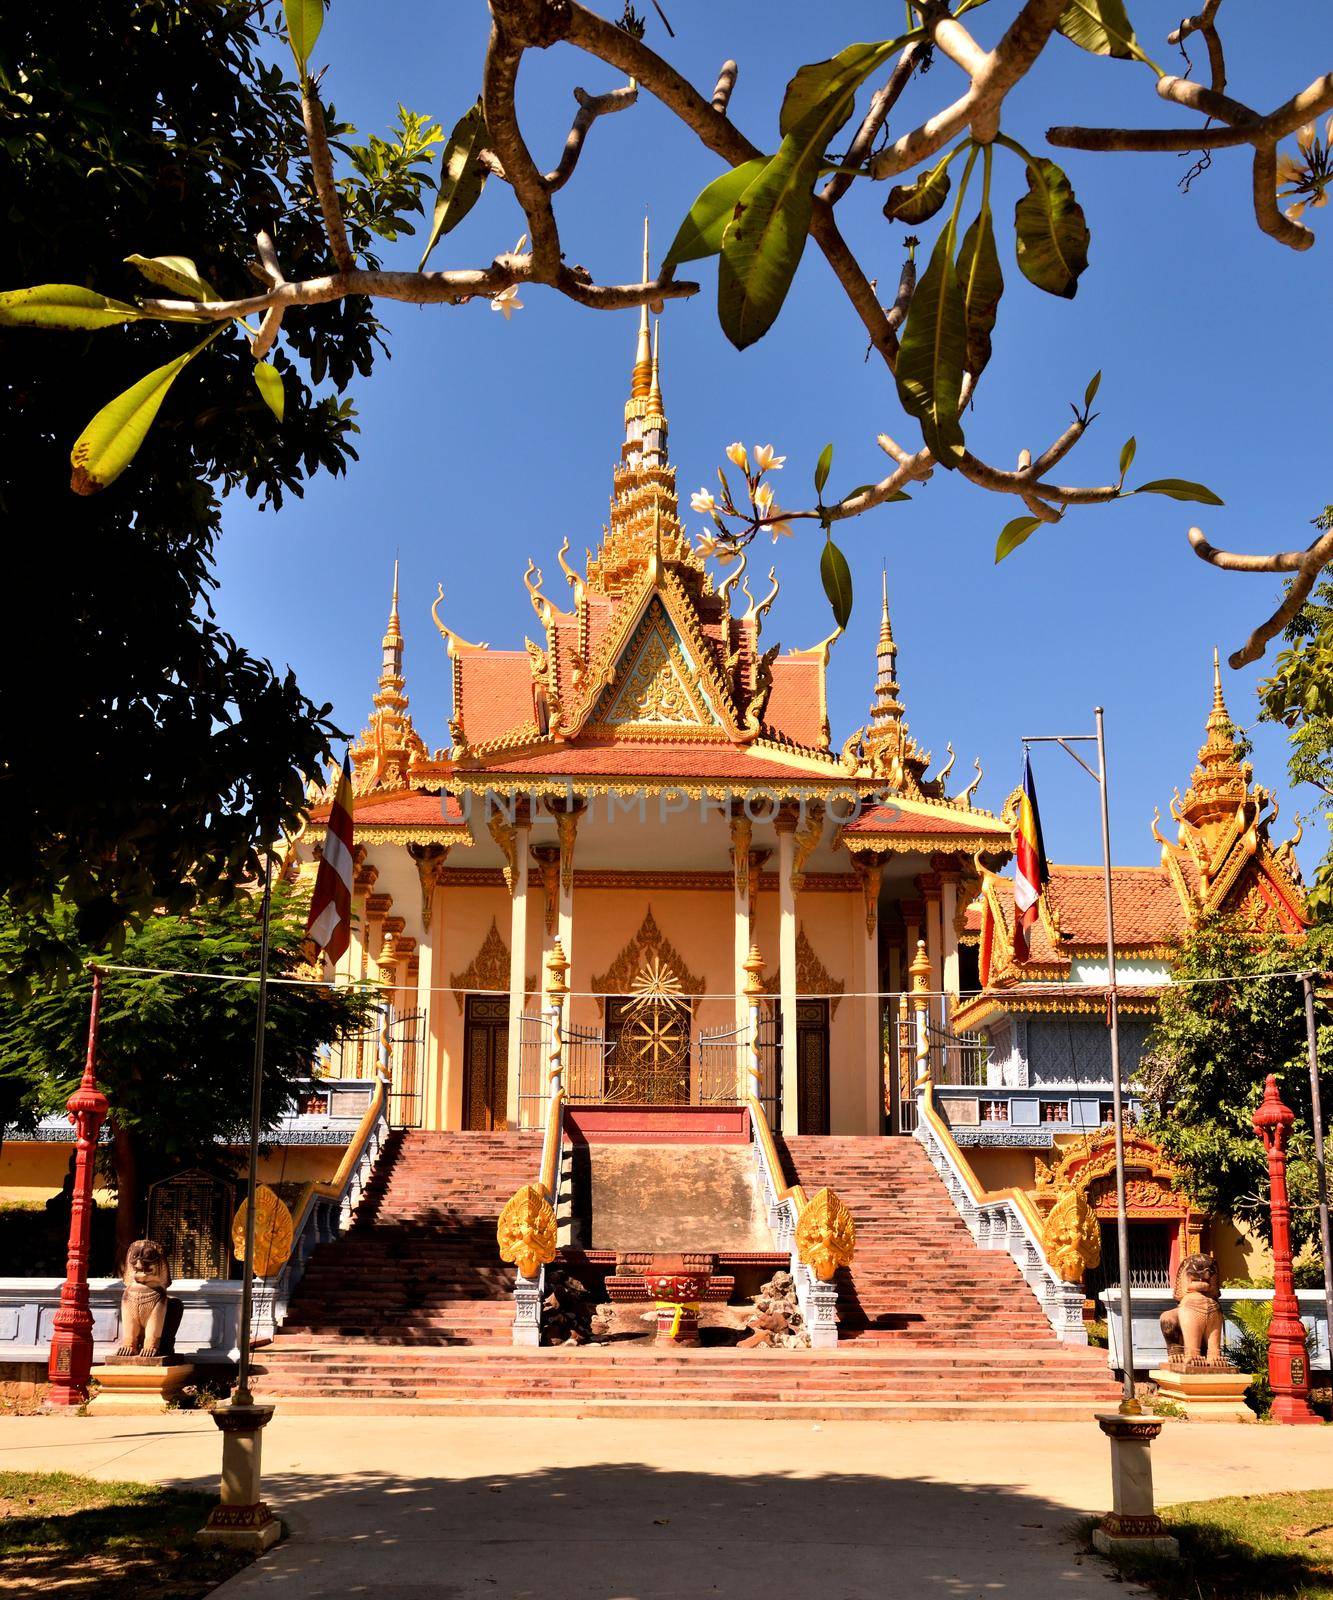 View of the modern Ek Phnom temple, Battambang, Cambodia